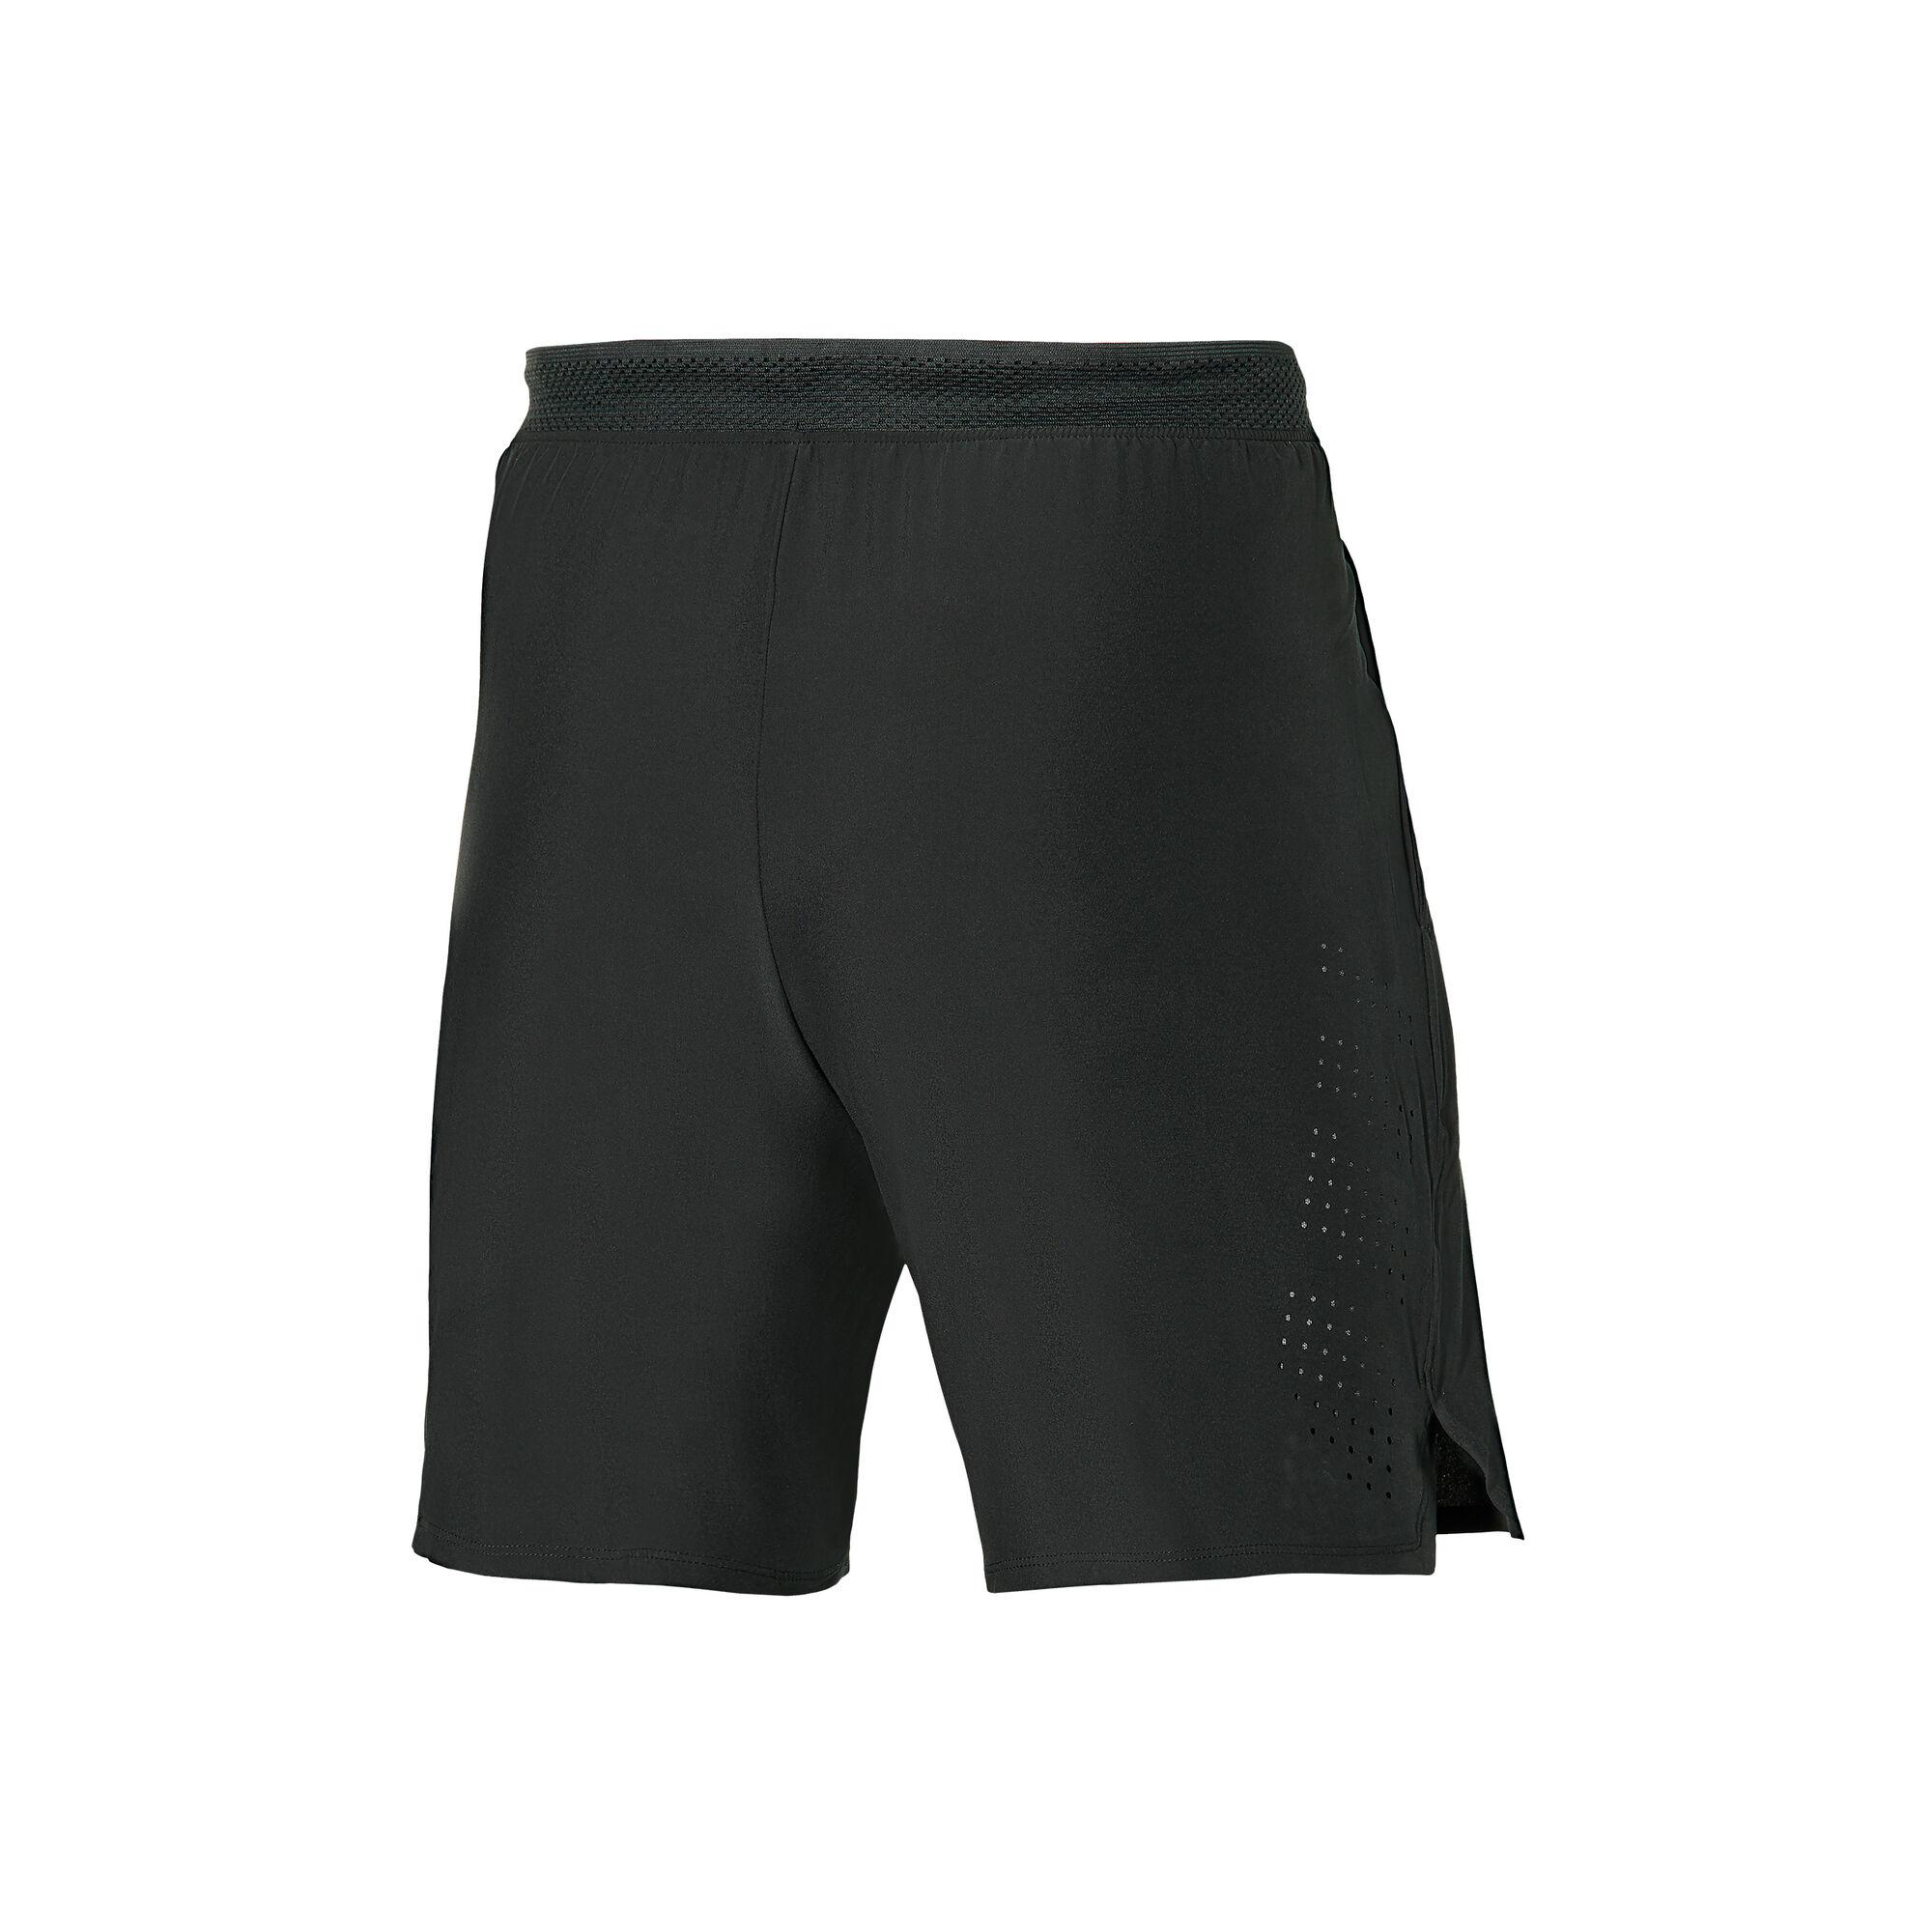 Buy Mizuno 8in Amplify Shorts Men Black online